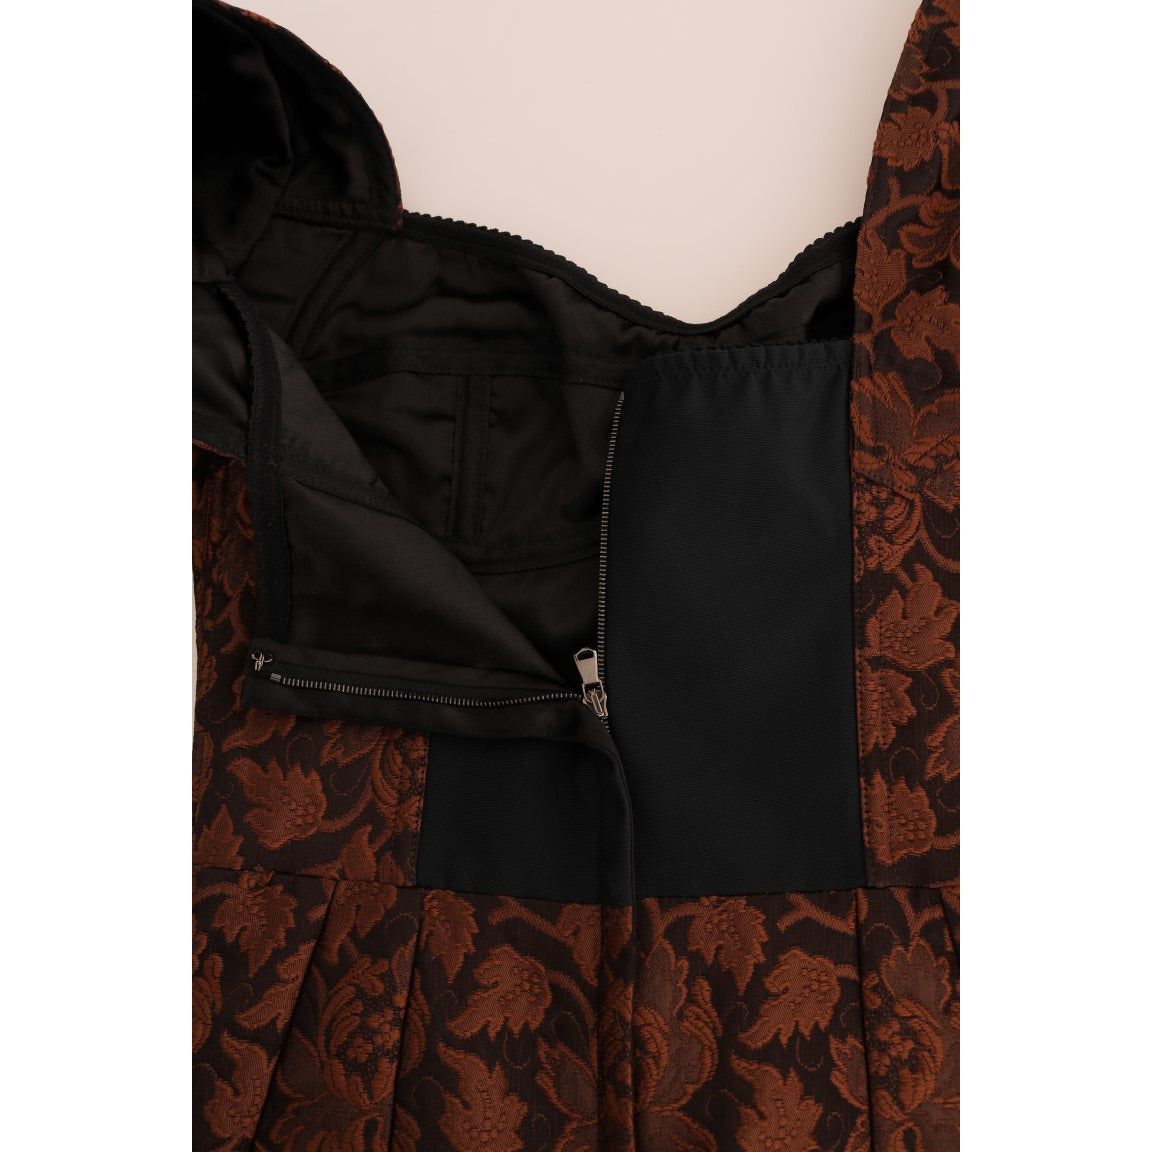 Dolce & Gabbana Chic Brown Mini Wool Blend Dress Dresses black-brown-floral-brocade-a-line-dress